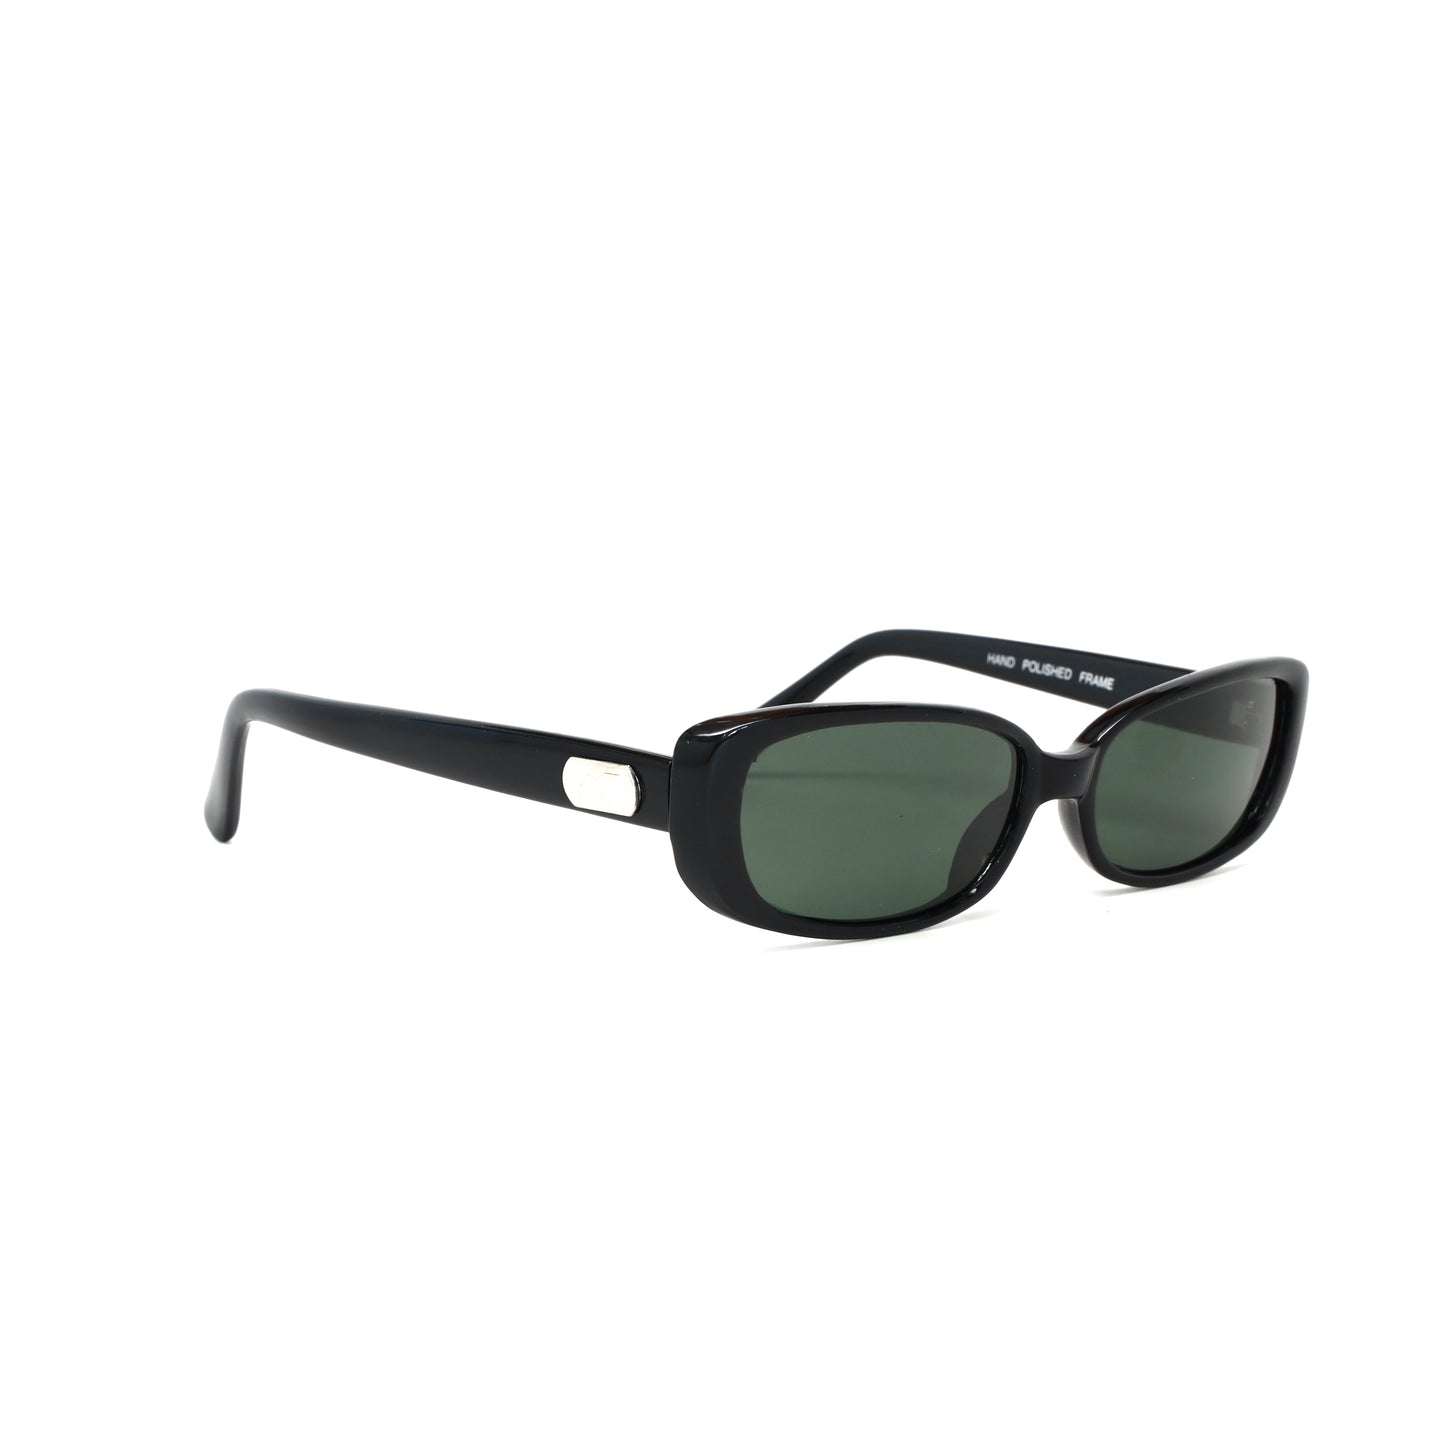 intage Small Sized Rectangle Original Sunglasses - Black